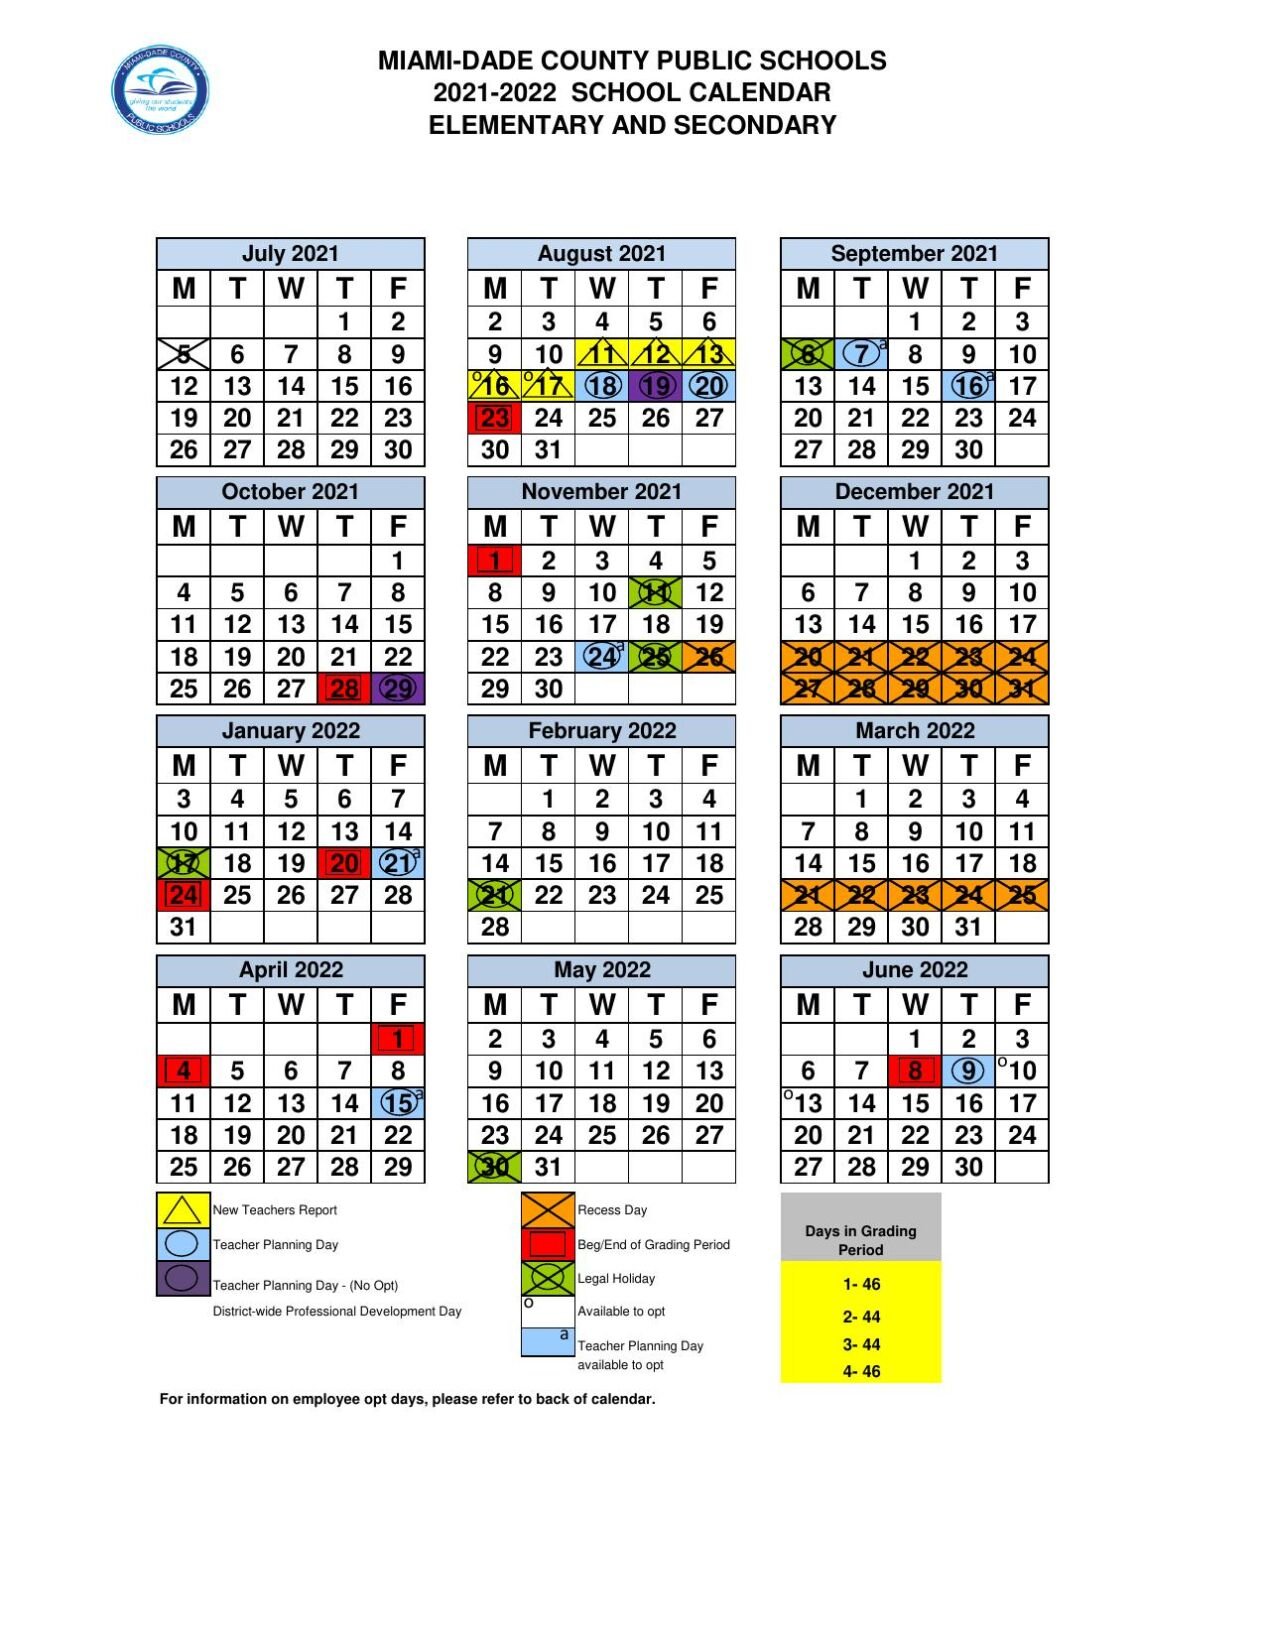 Emory Academic Calendar 2022 23 Miami-Dade County Public Schools 2021-22 Calendar | Education |  Miamitimesonline.com